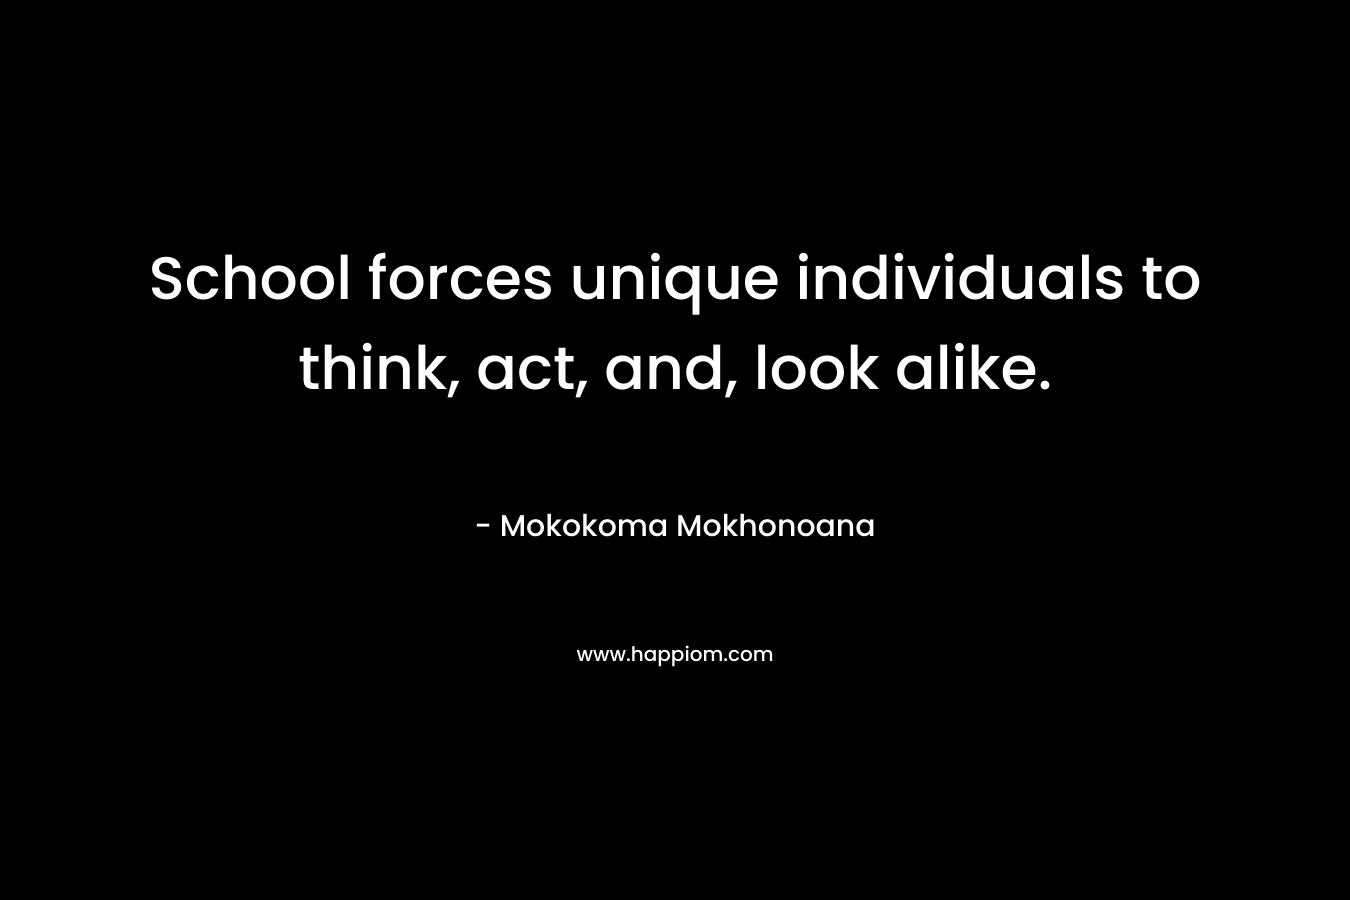 School forces unique individuals to think, act, and, look alike. – Mokokoma Mokhonoana